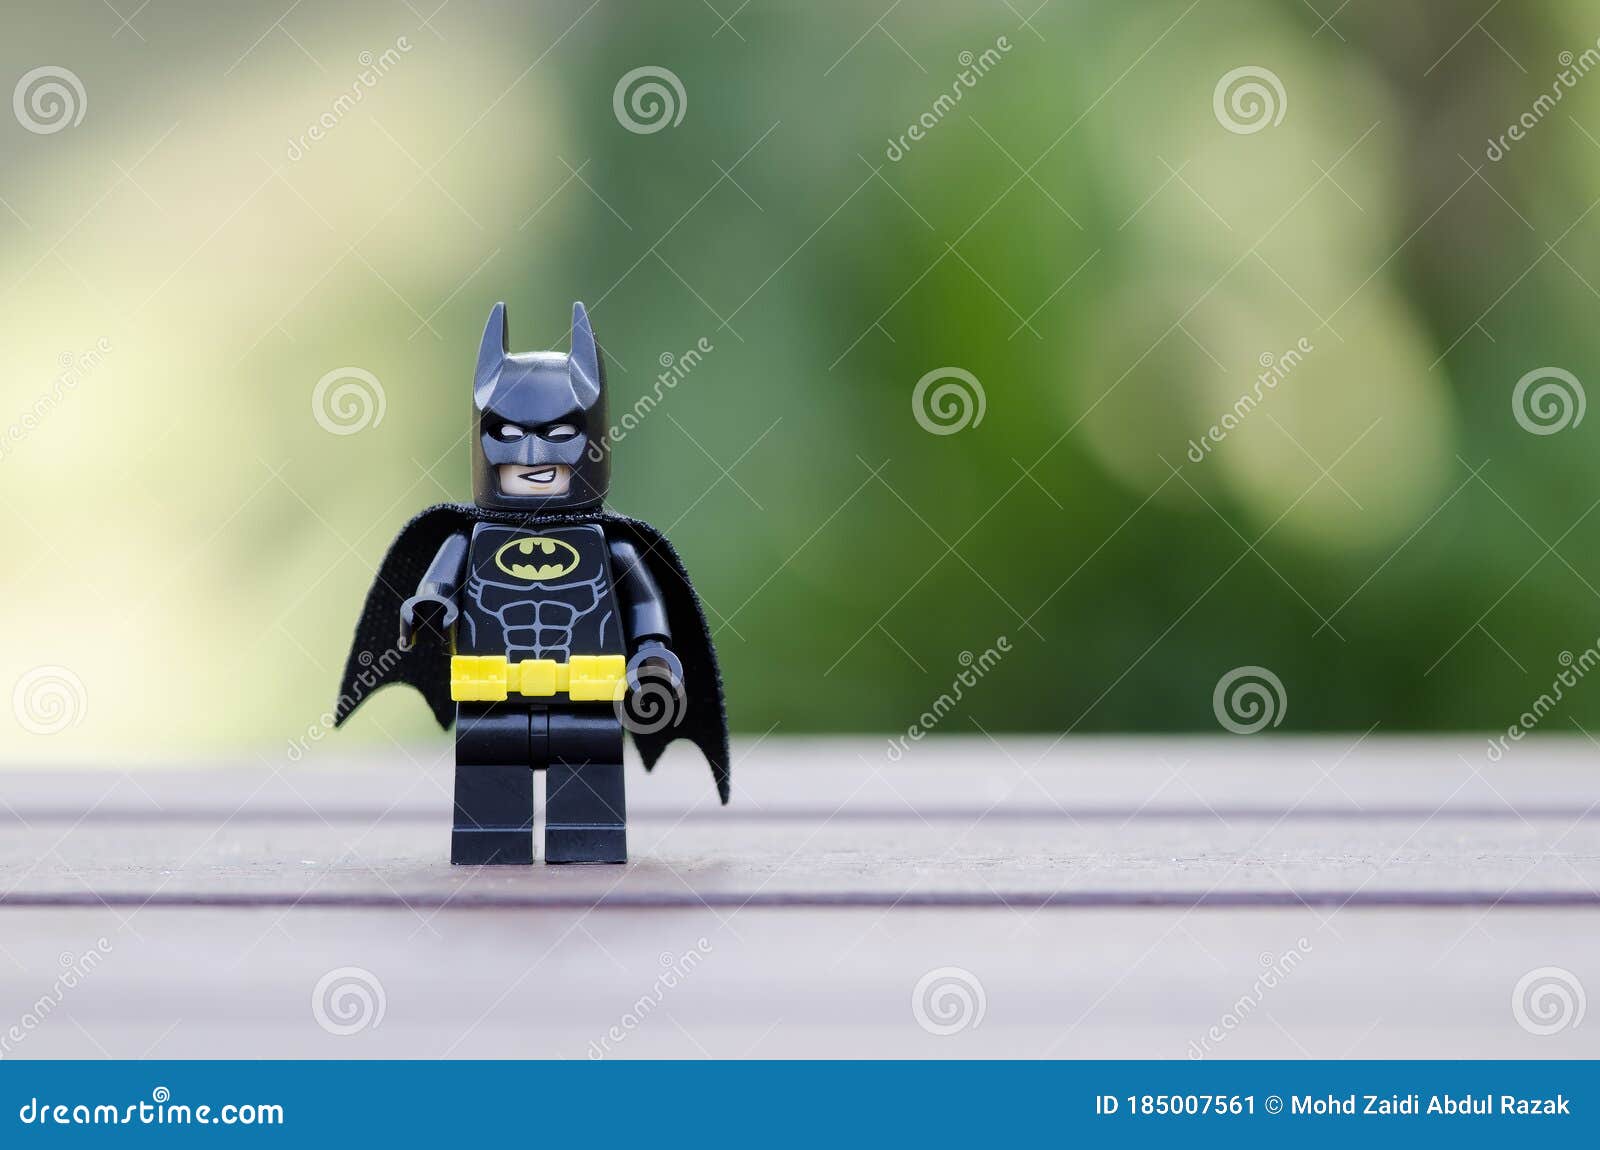 Lego batman minifigure editorial photo. Image of superheroes - 185007561